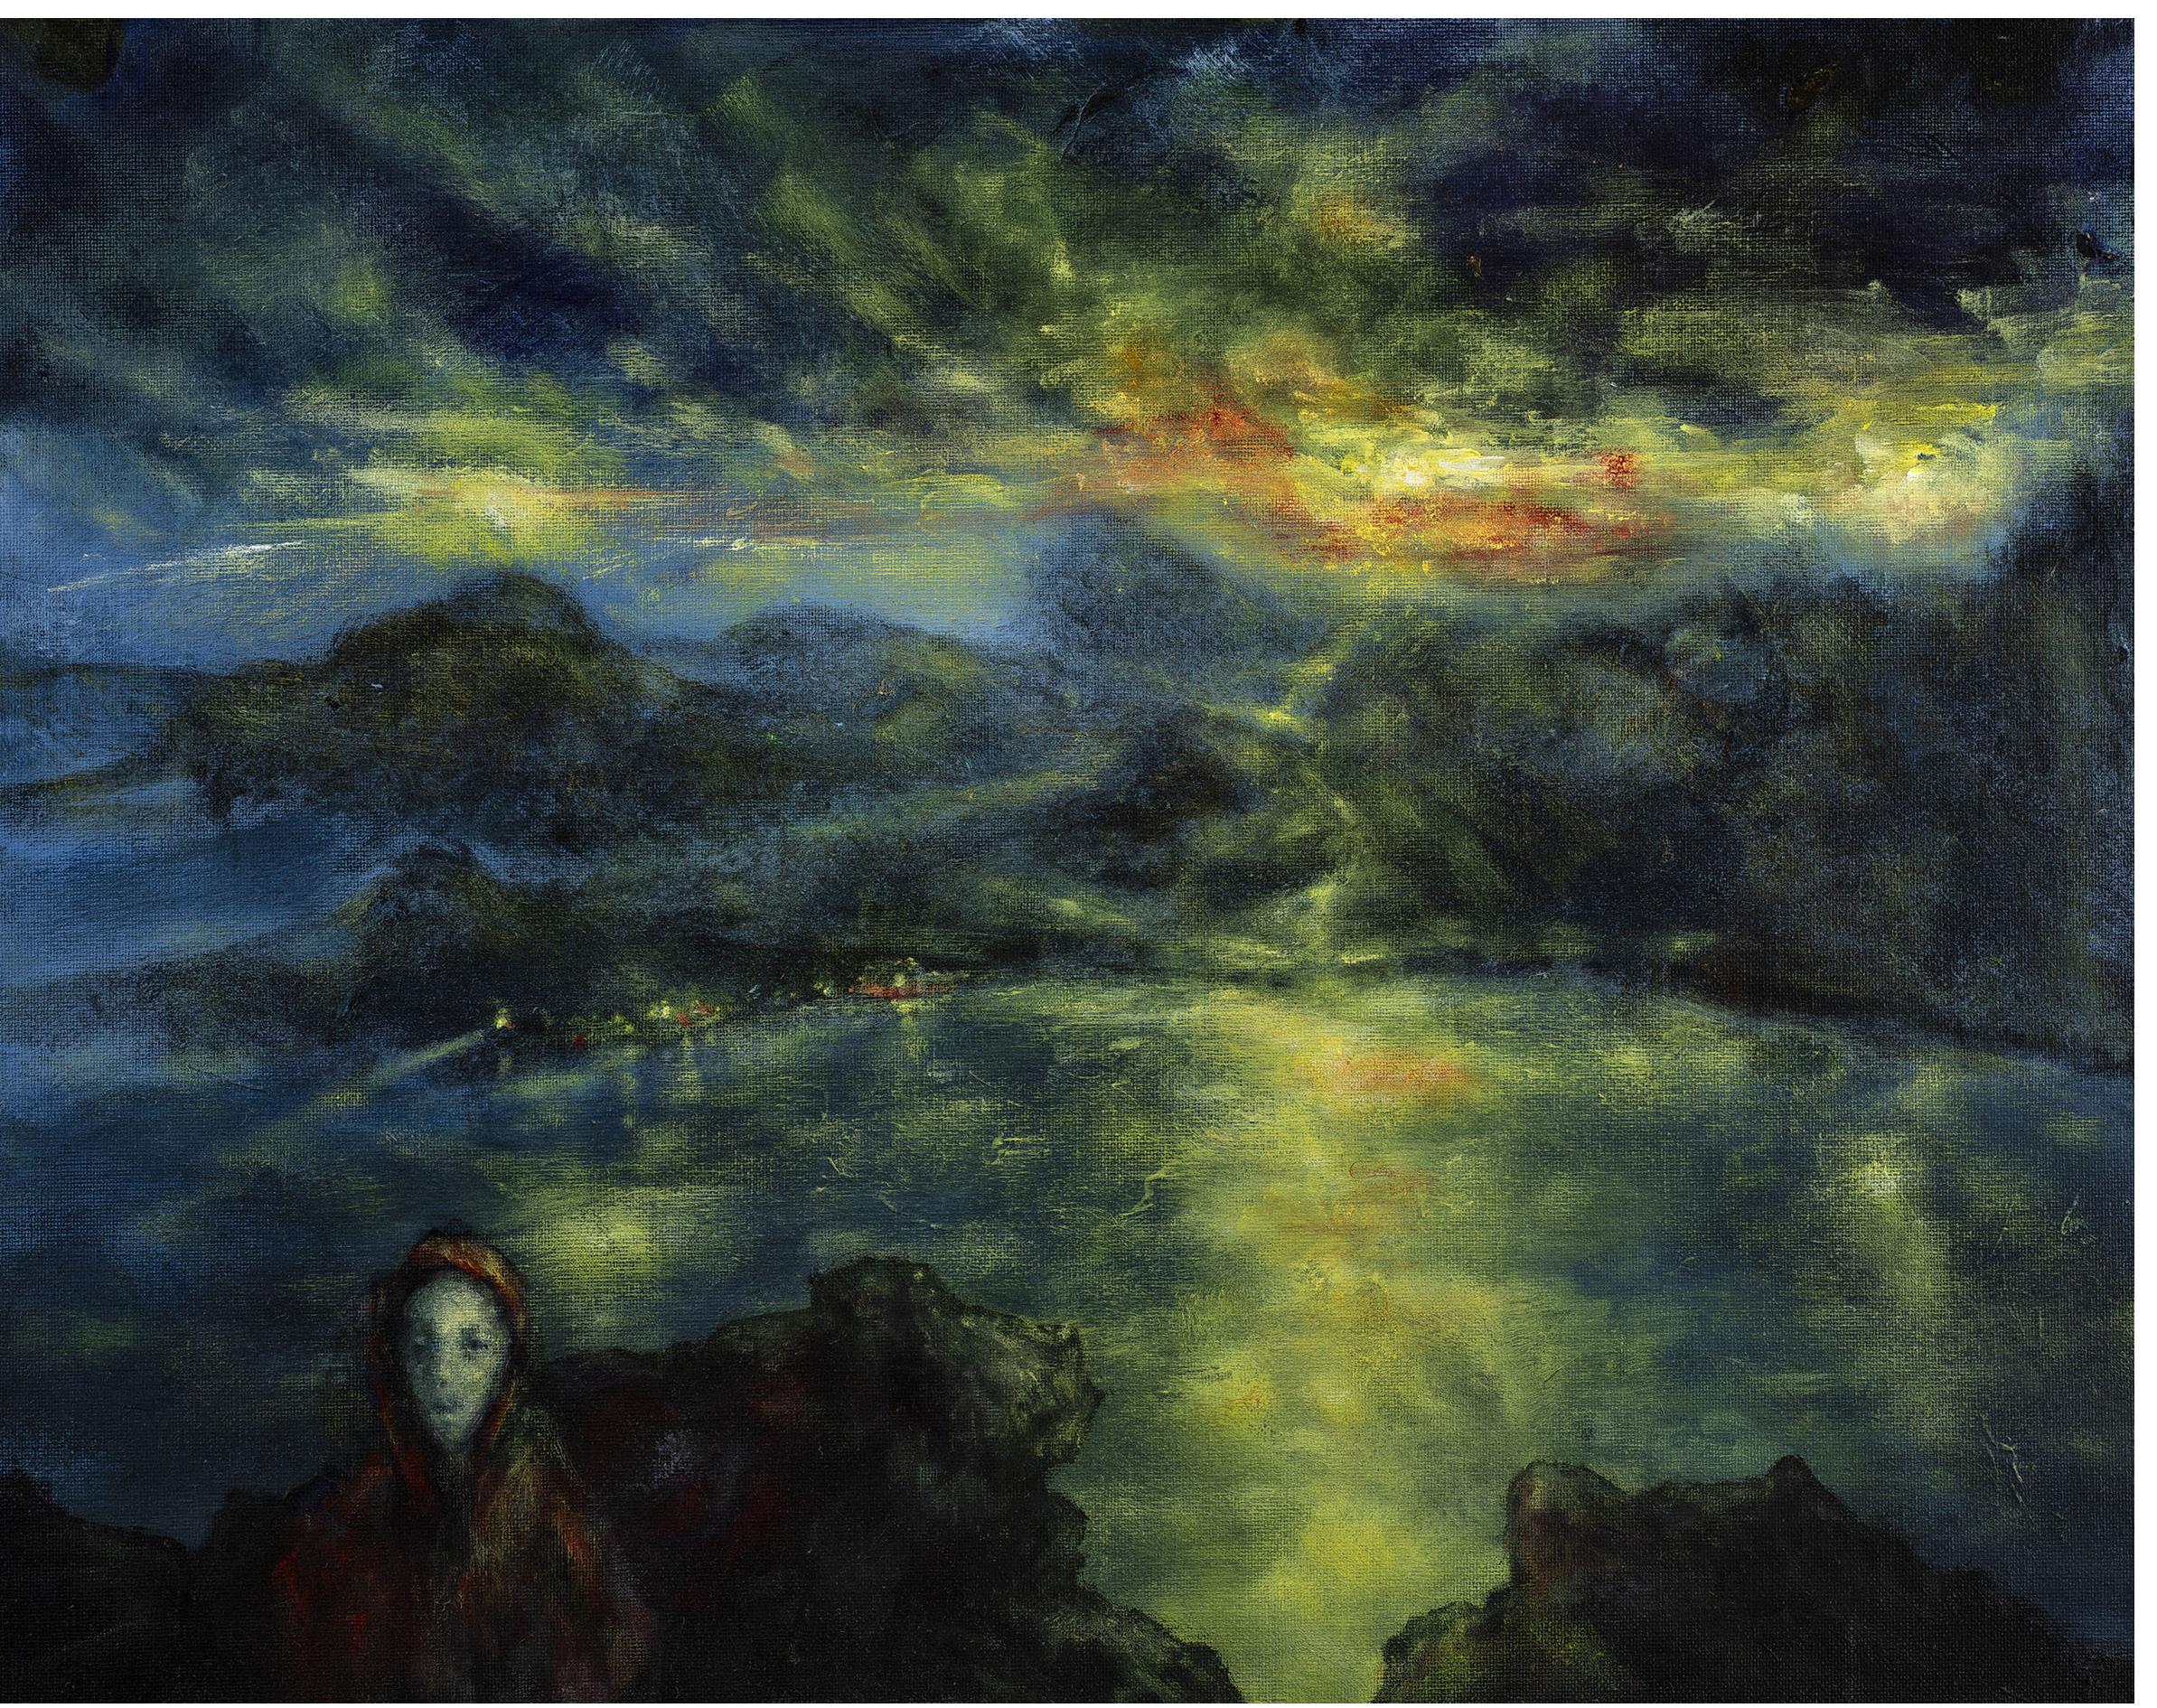 Matthew Bateson - "Reverie", oil on canvas board, 40 x 50 cm